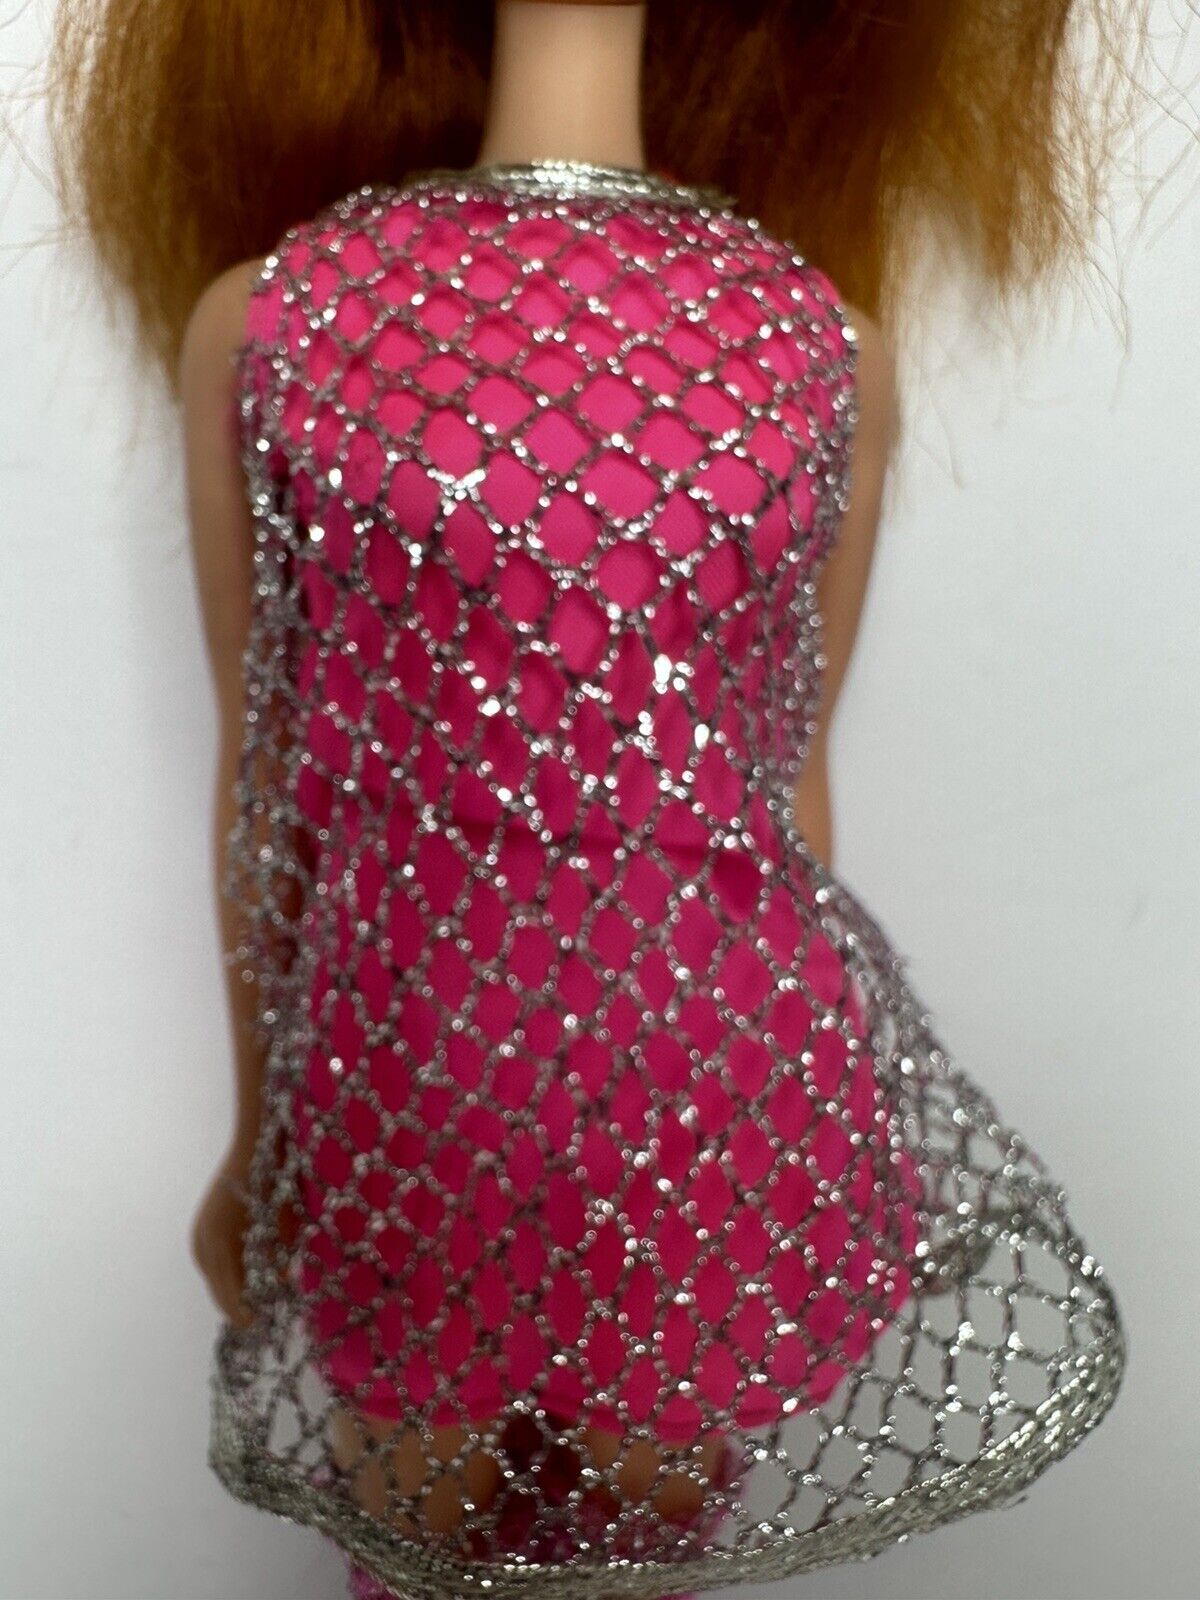 Rare 1966 Vintage Barbie Mattel Stacie Doll - Twist & Turn Red Hair, Made in Japan - TreasuTiques